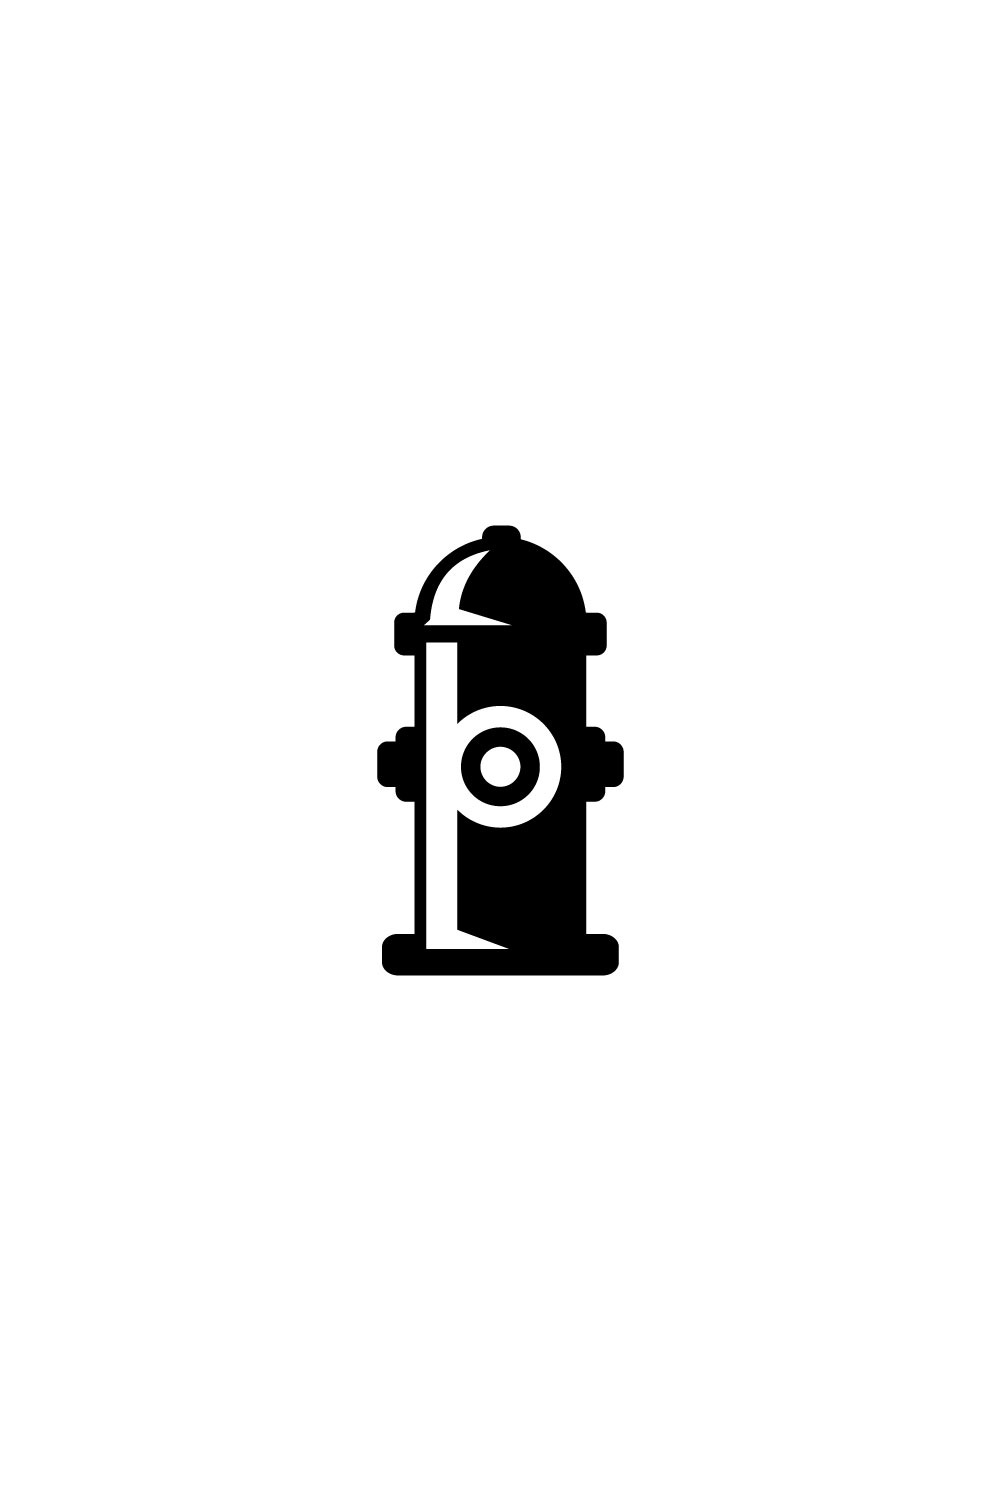 Fire Hydrant Logo Vector pinterest image.